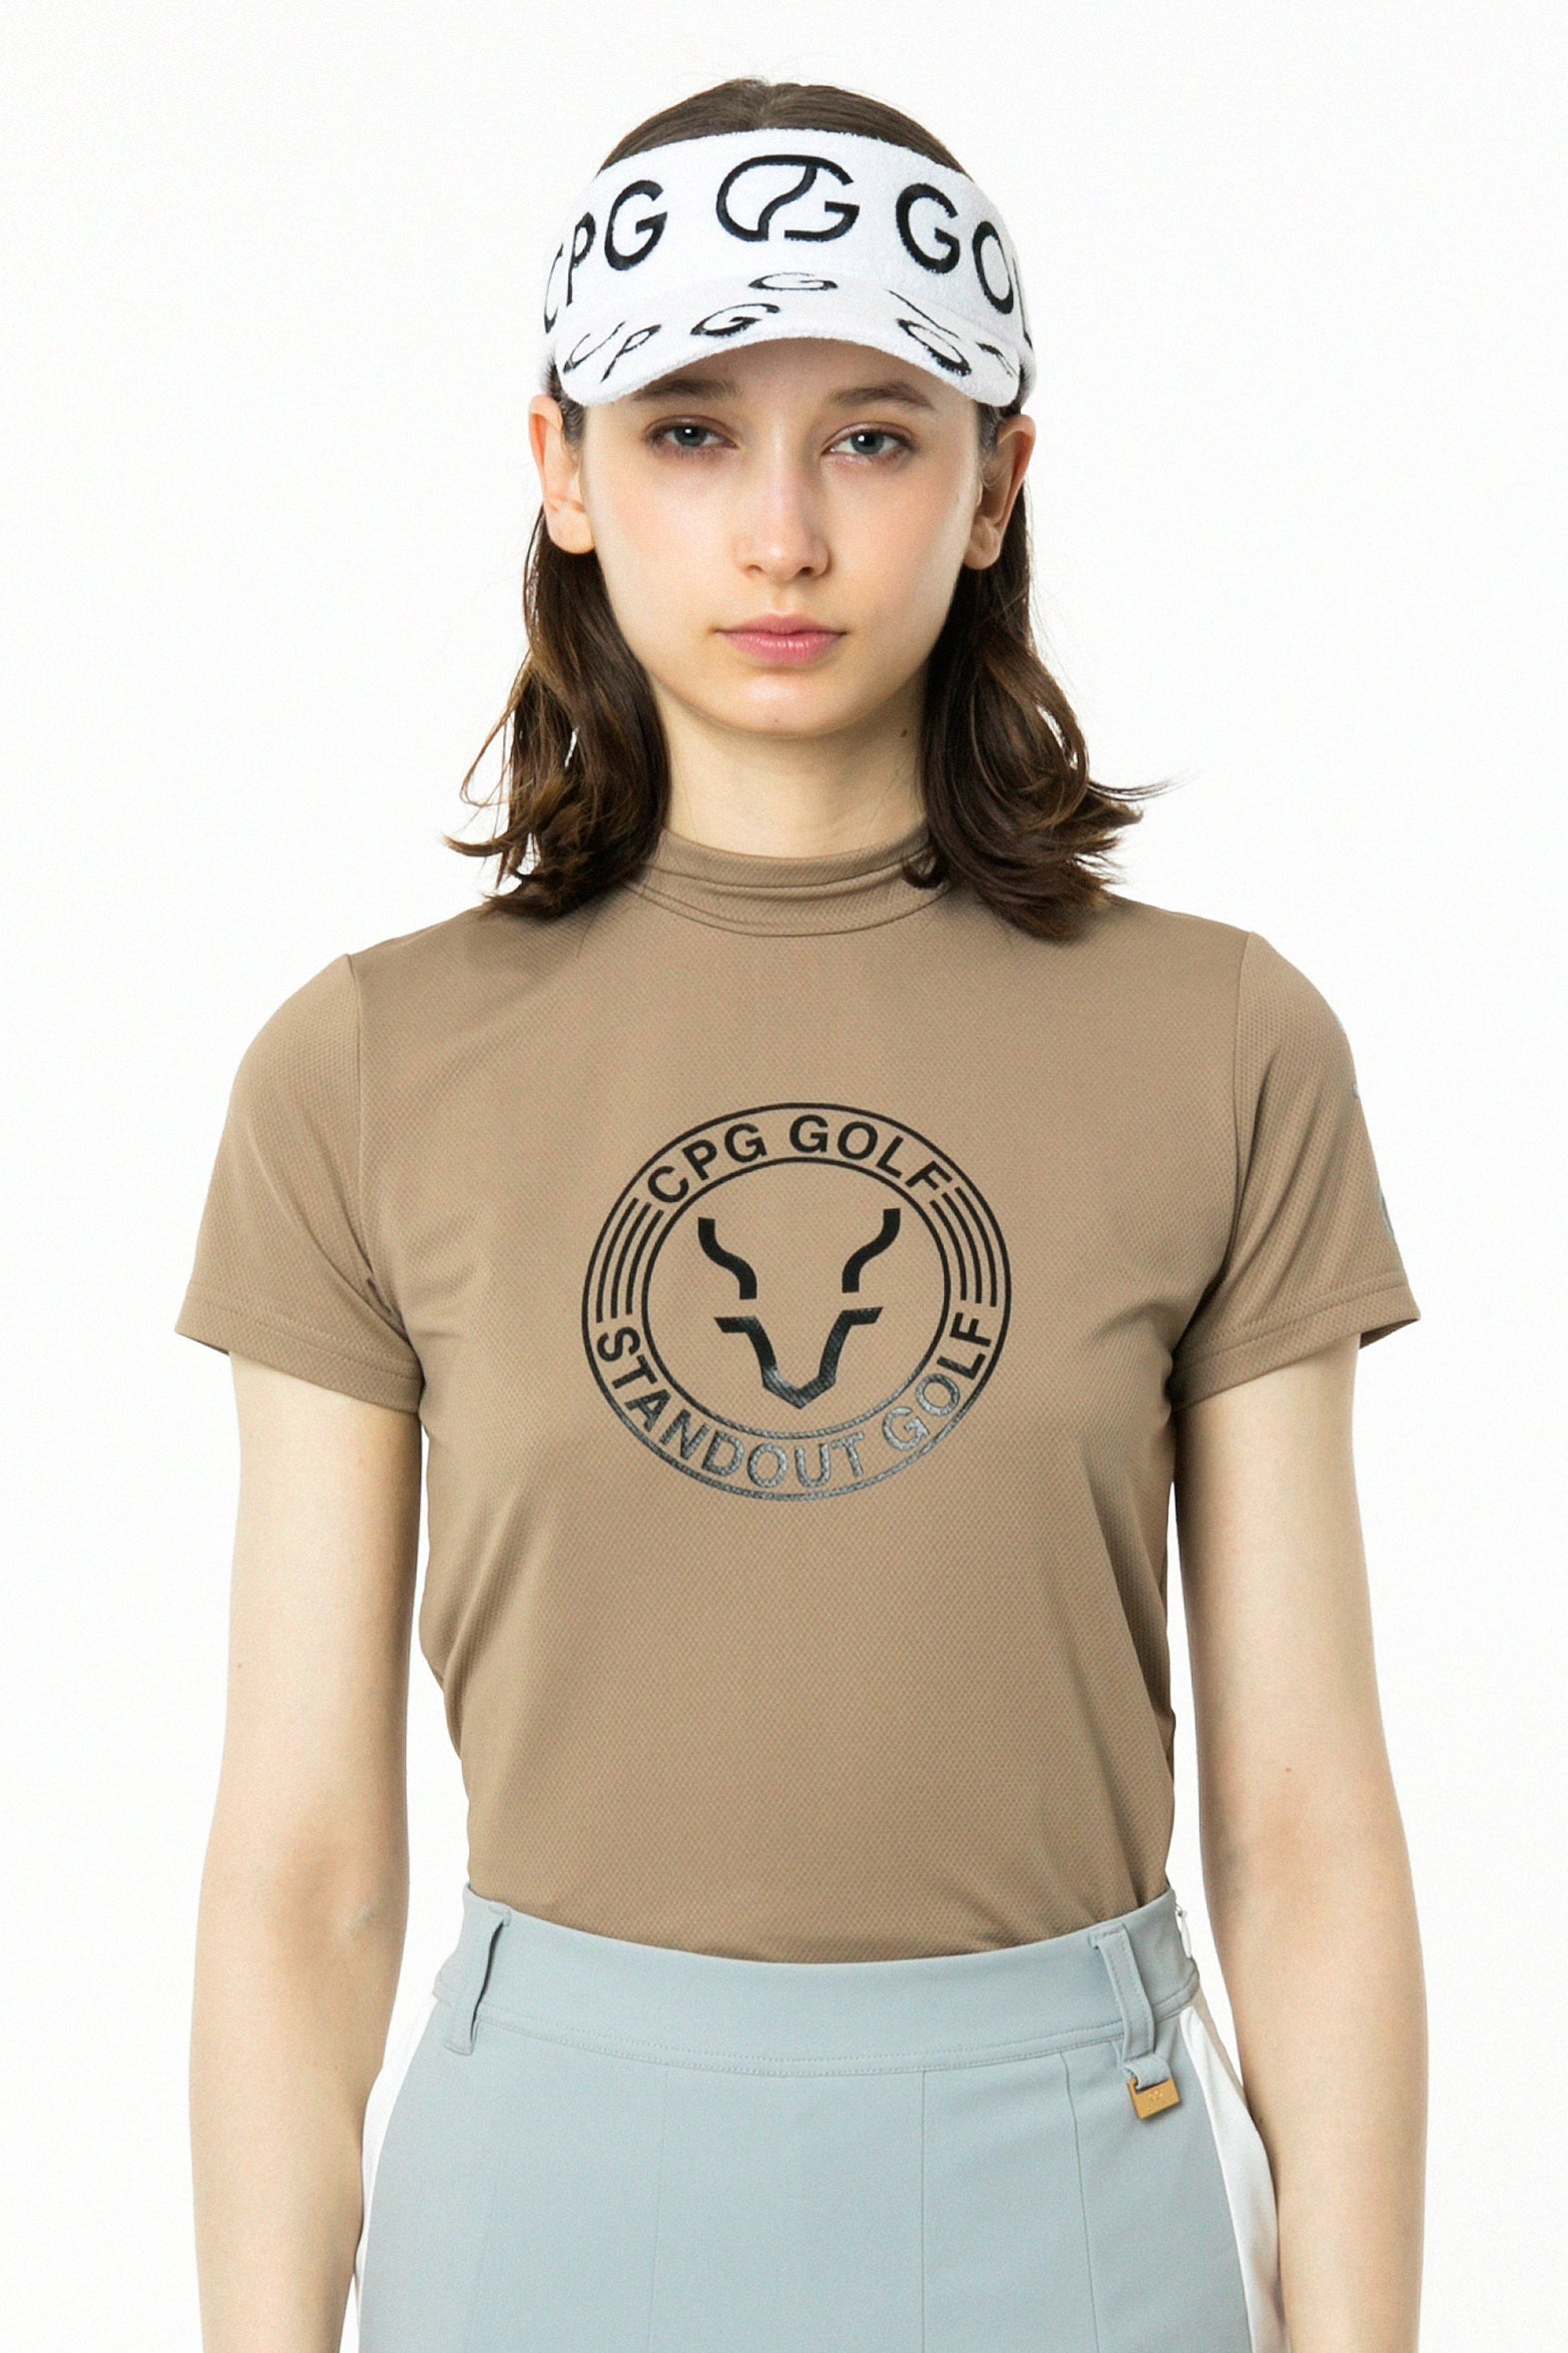 CPG GOLF シーピージーゴルフ ゴルフウェア レディース Tシャツ 半袖 ロゴプリントモックネックショートスリーブモックネックシャツ